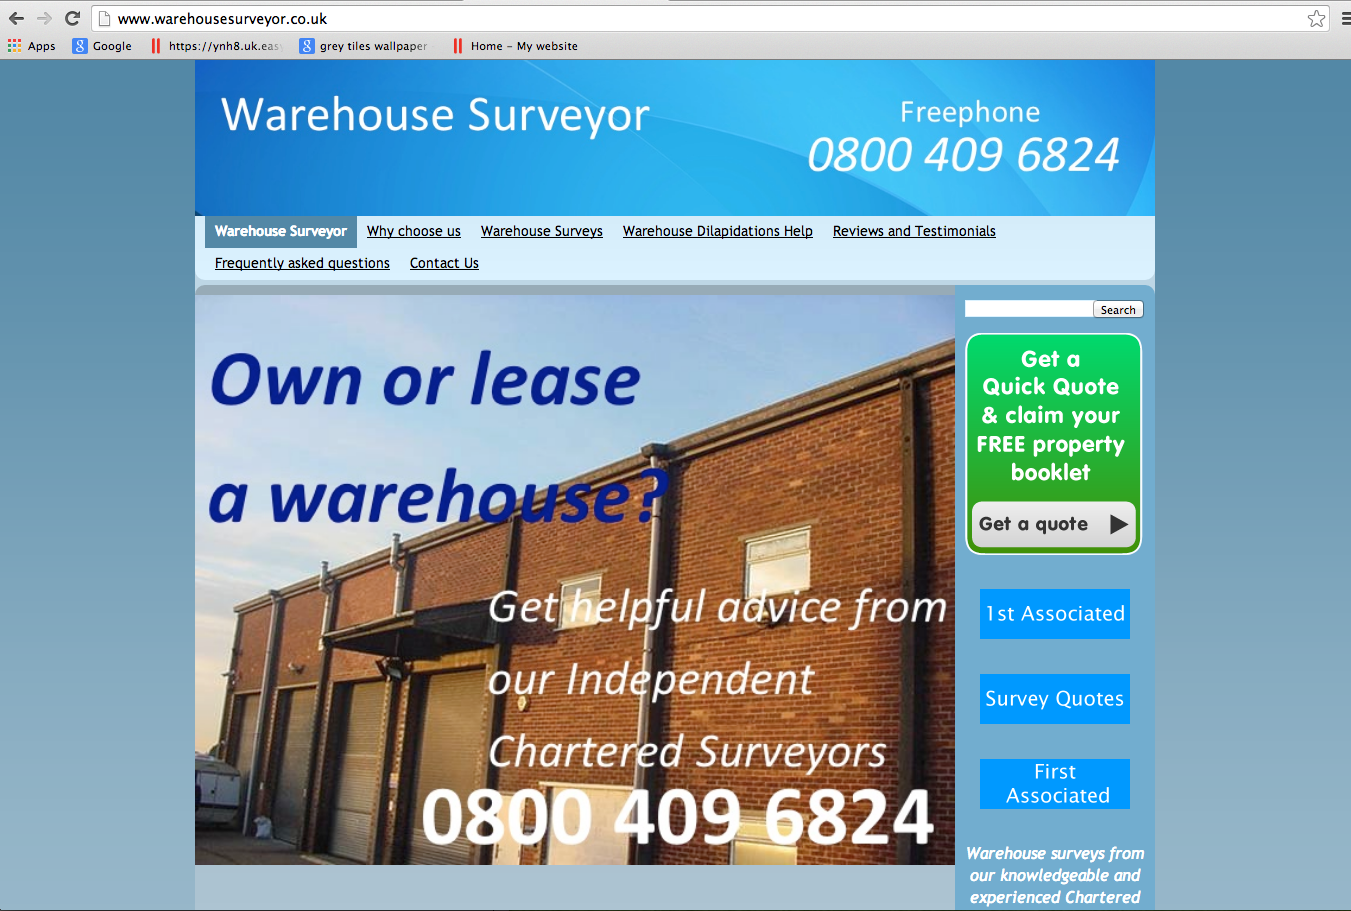  Take a Look at WarehouseSurveyor.co.uk